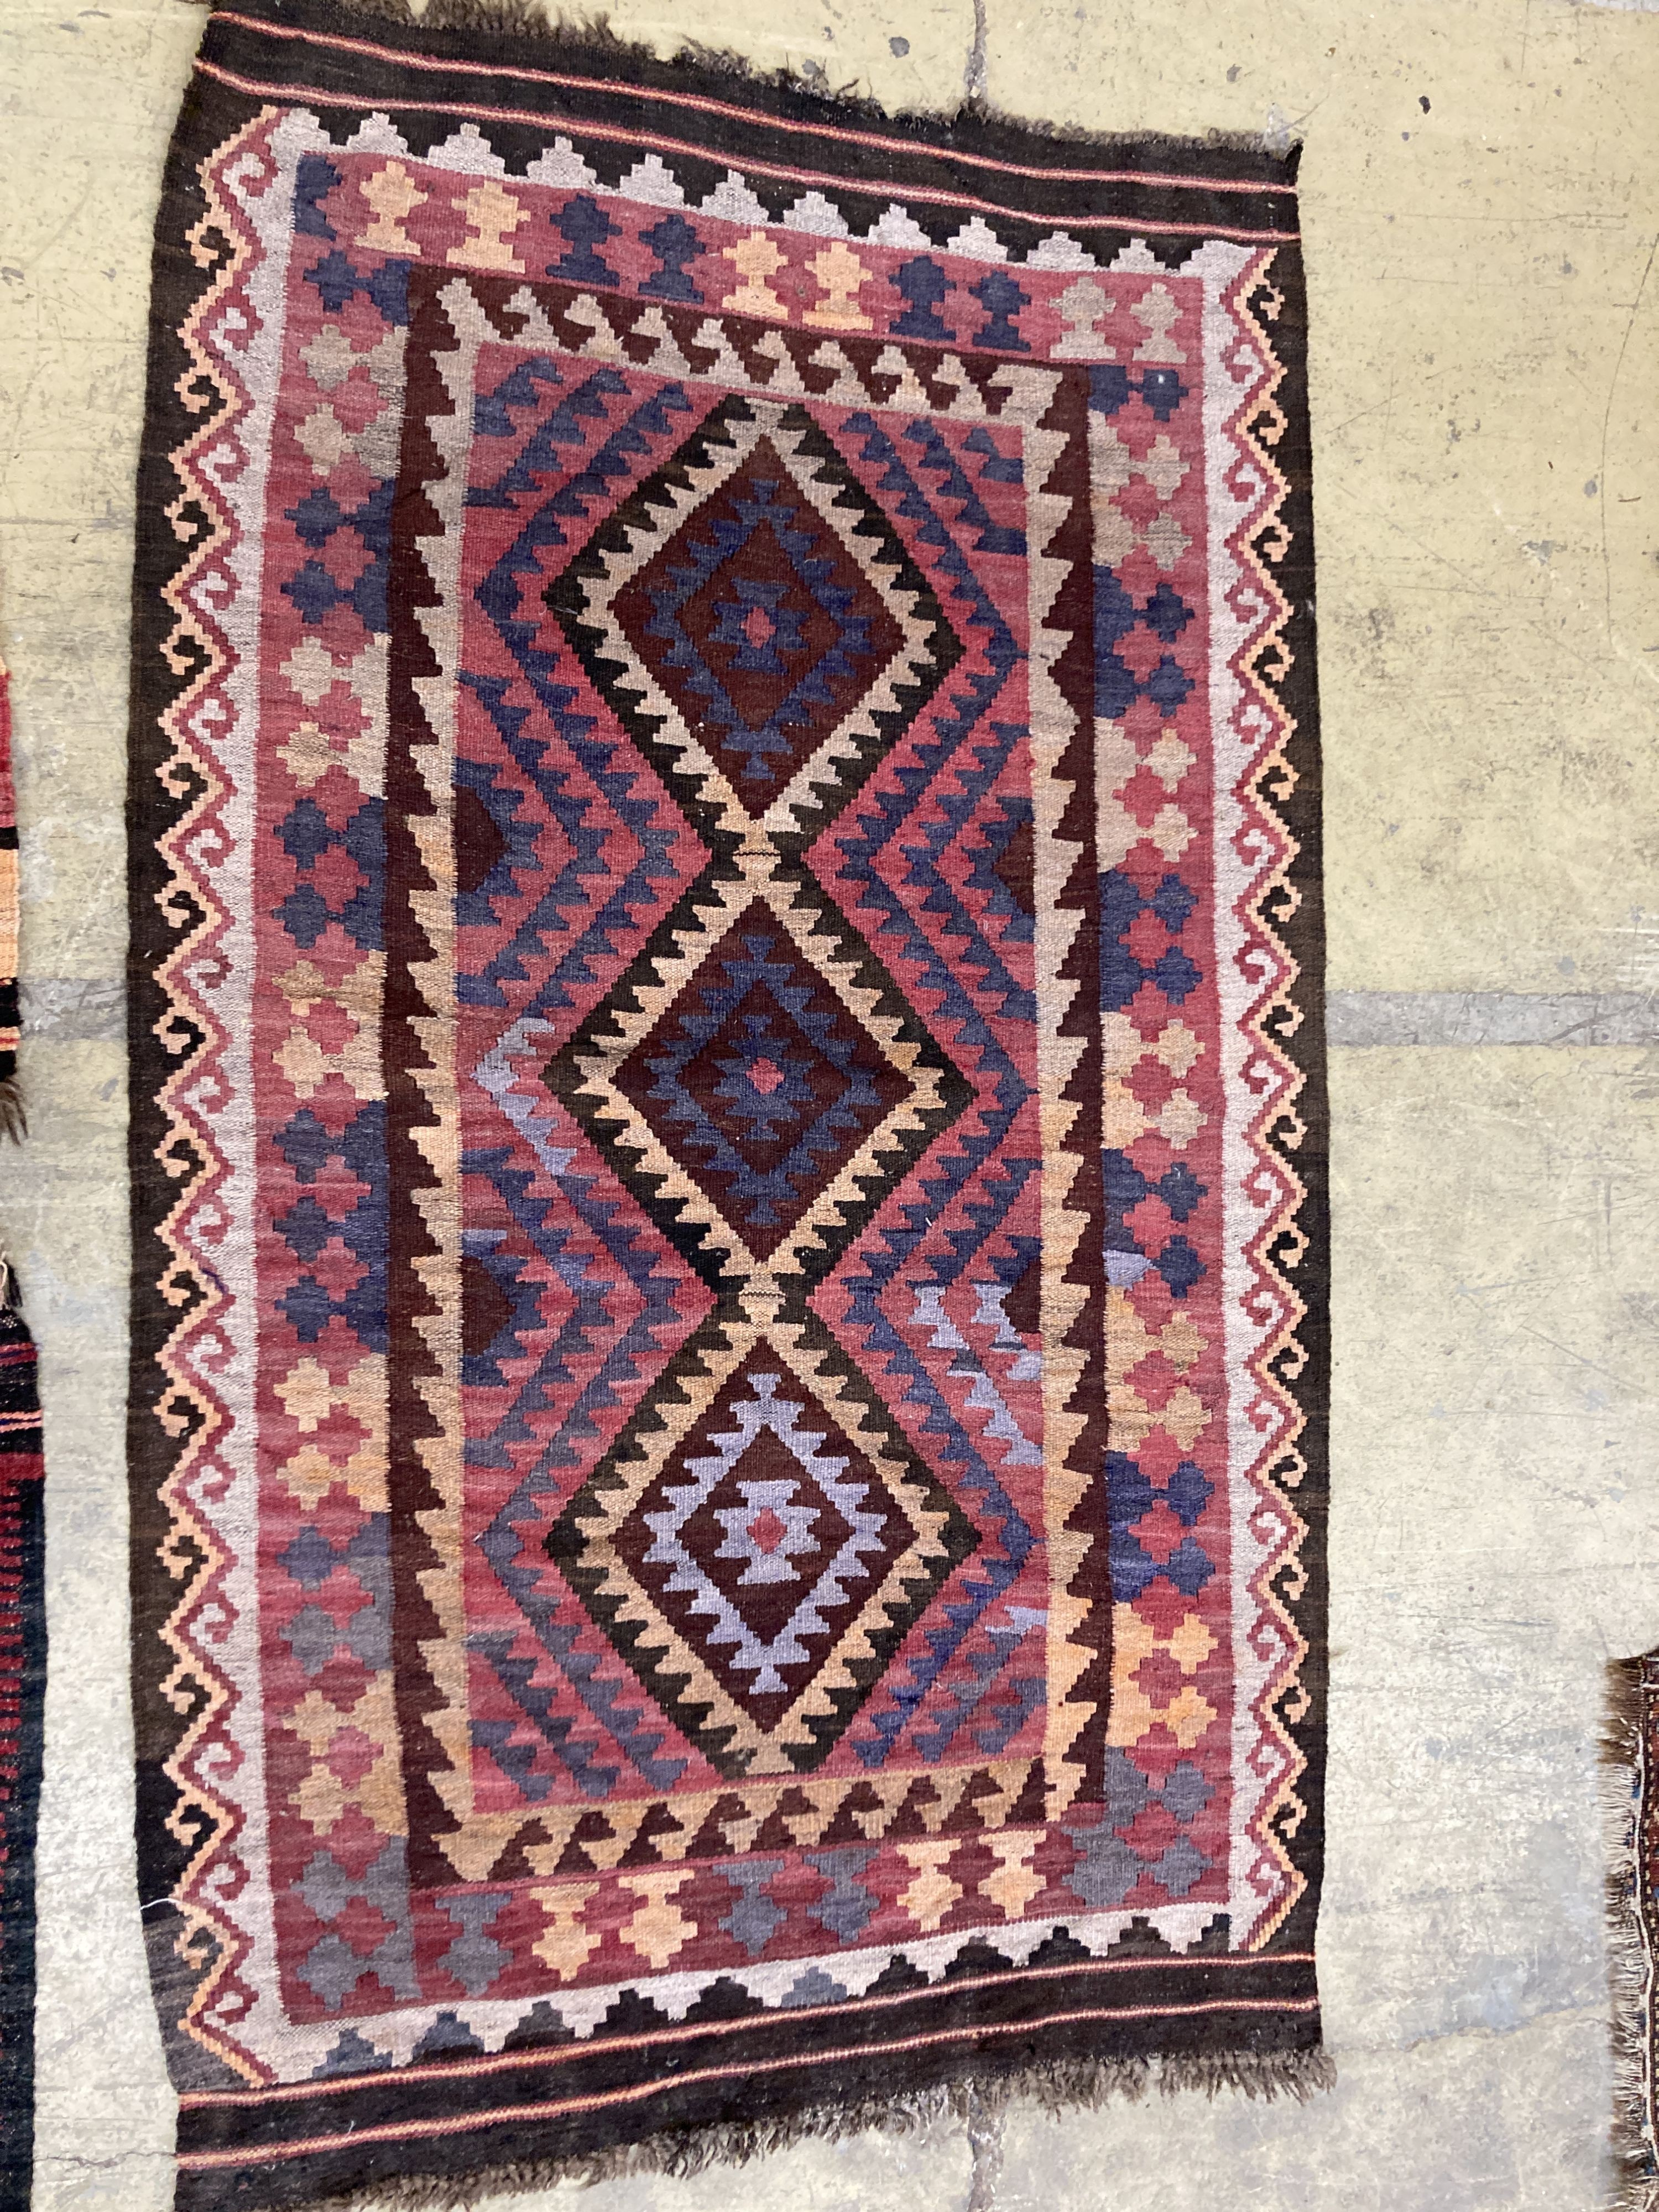 Three polychrome Kelim rugs, largest 180 x 100 cms